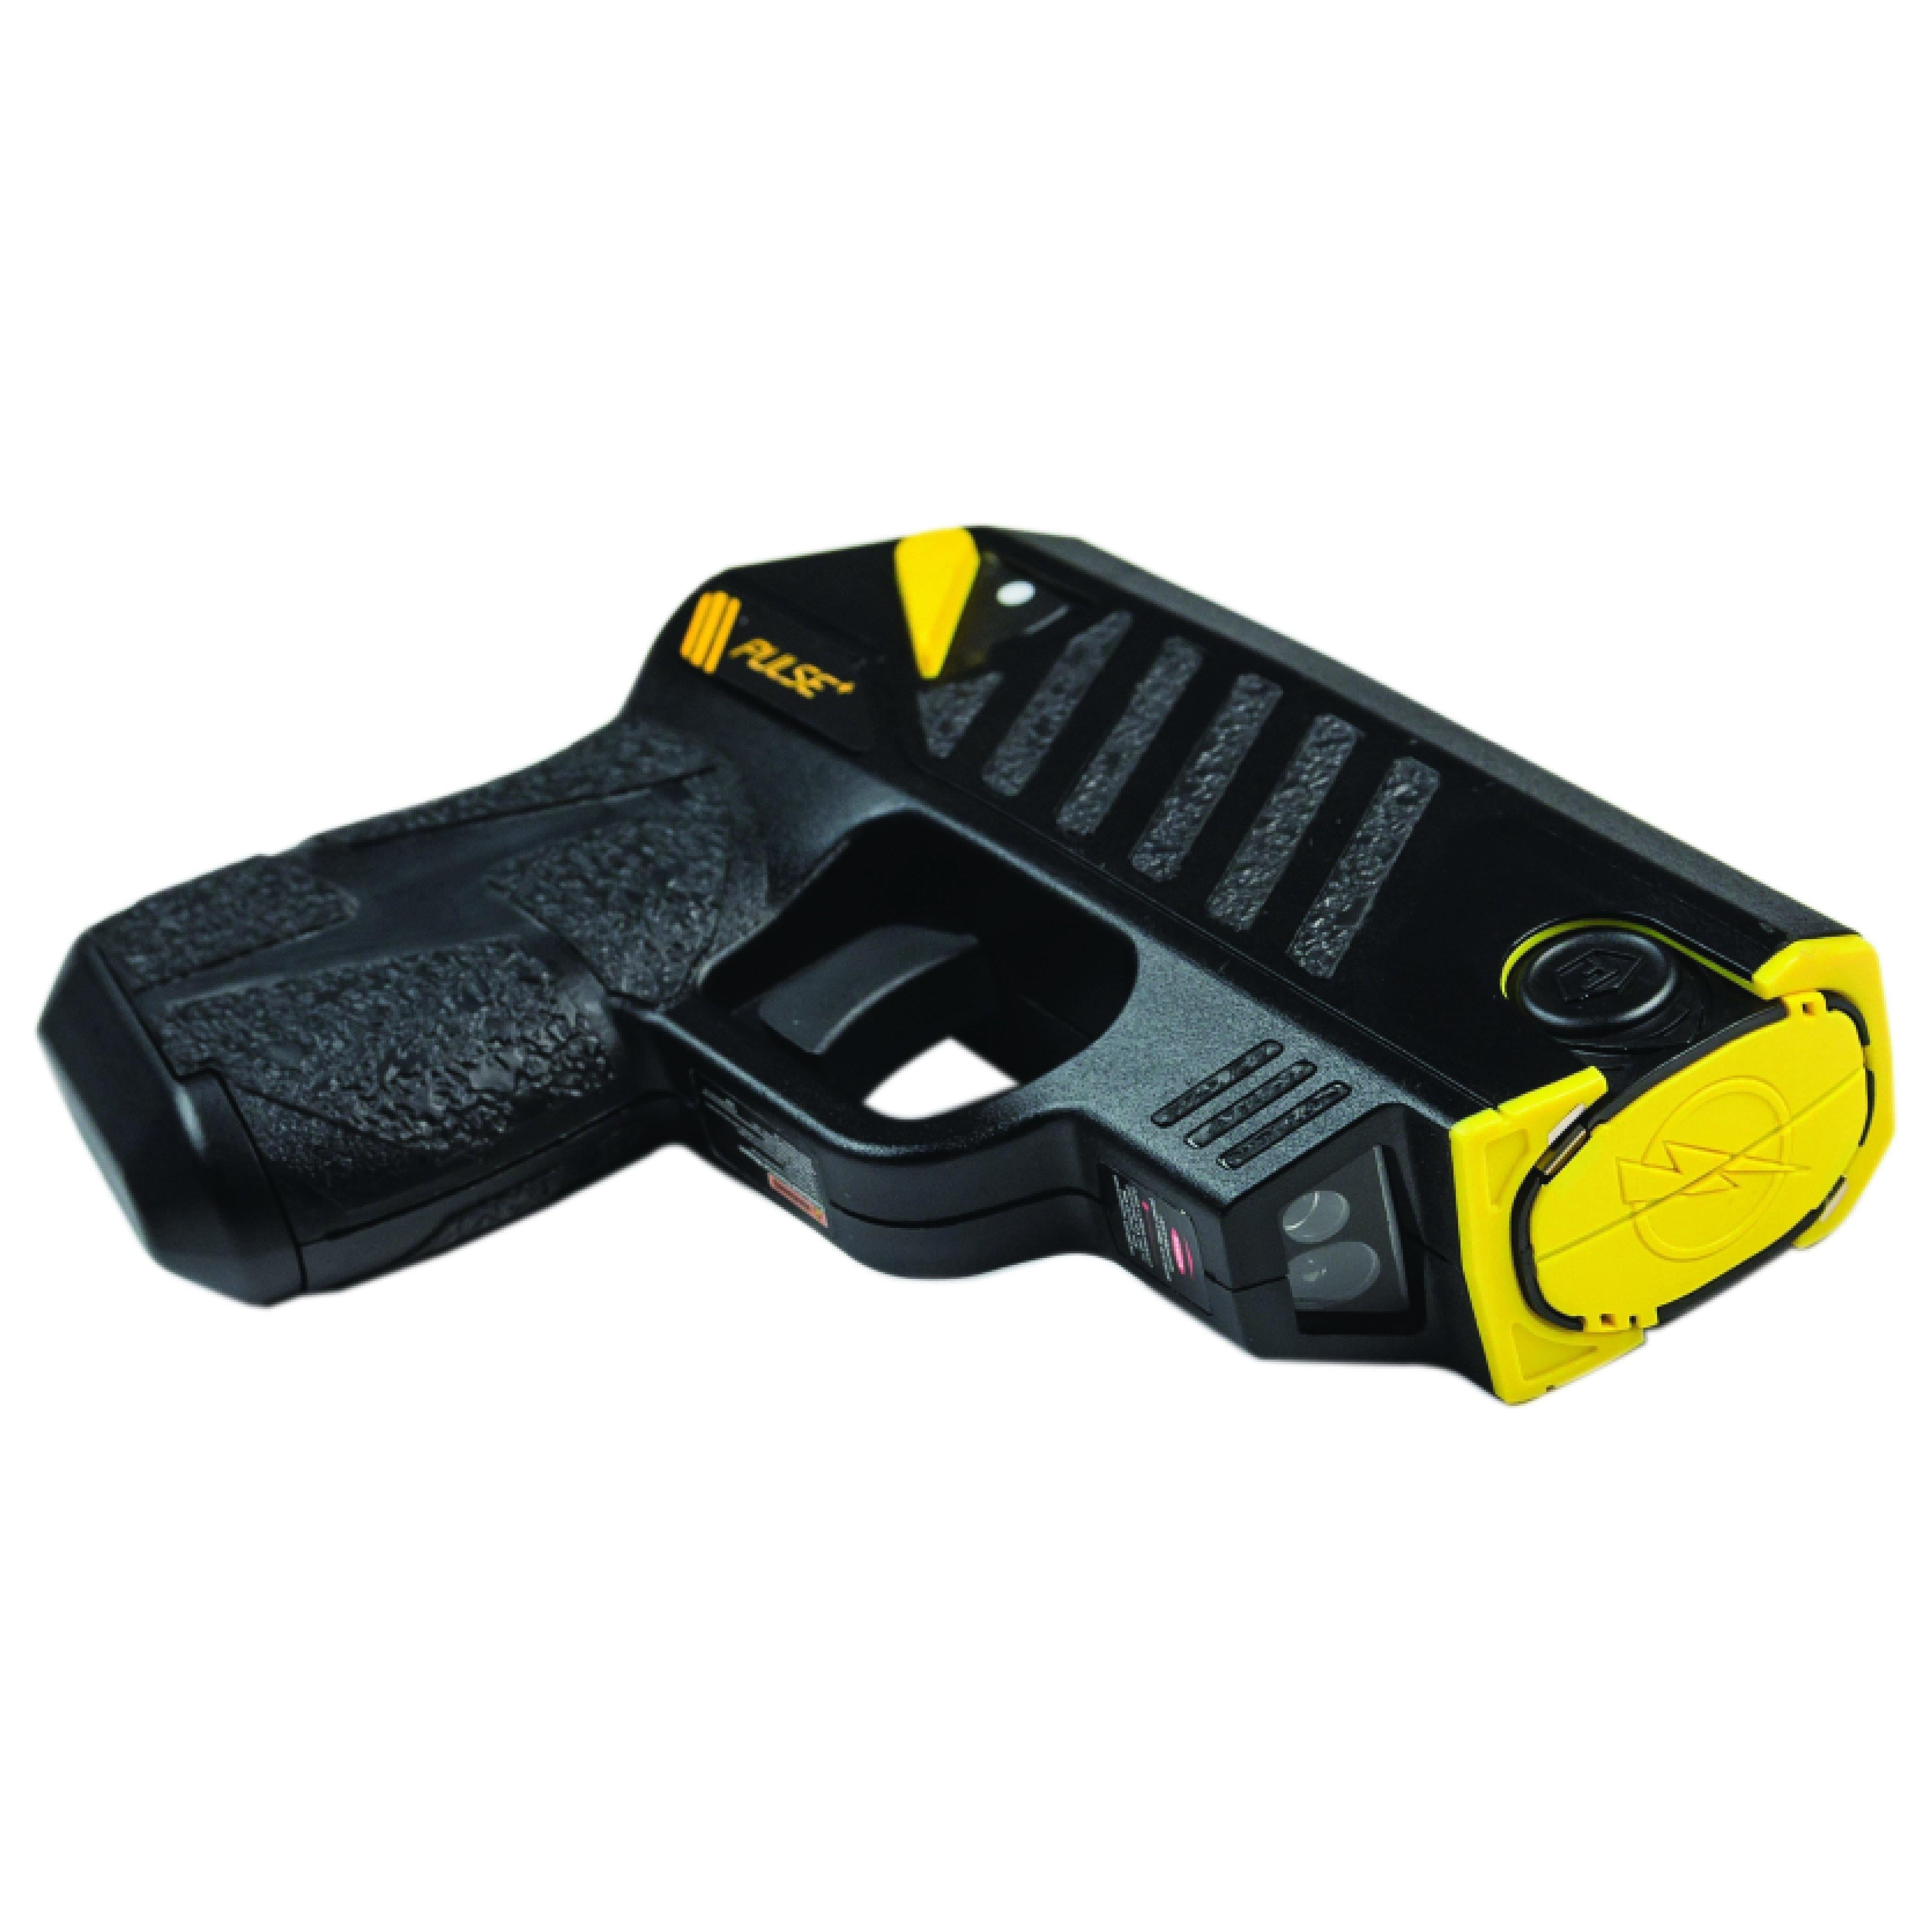 Pulse+ Stun Guns & Tasers Shield Protection Products LLC.